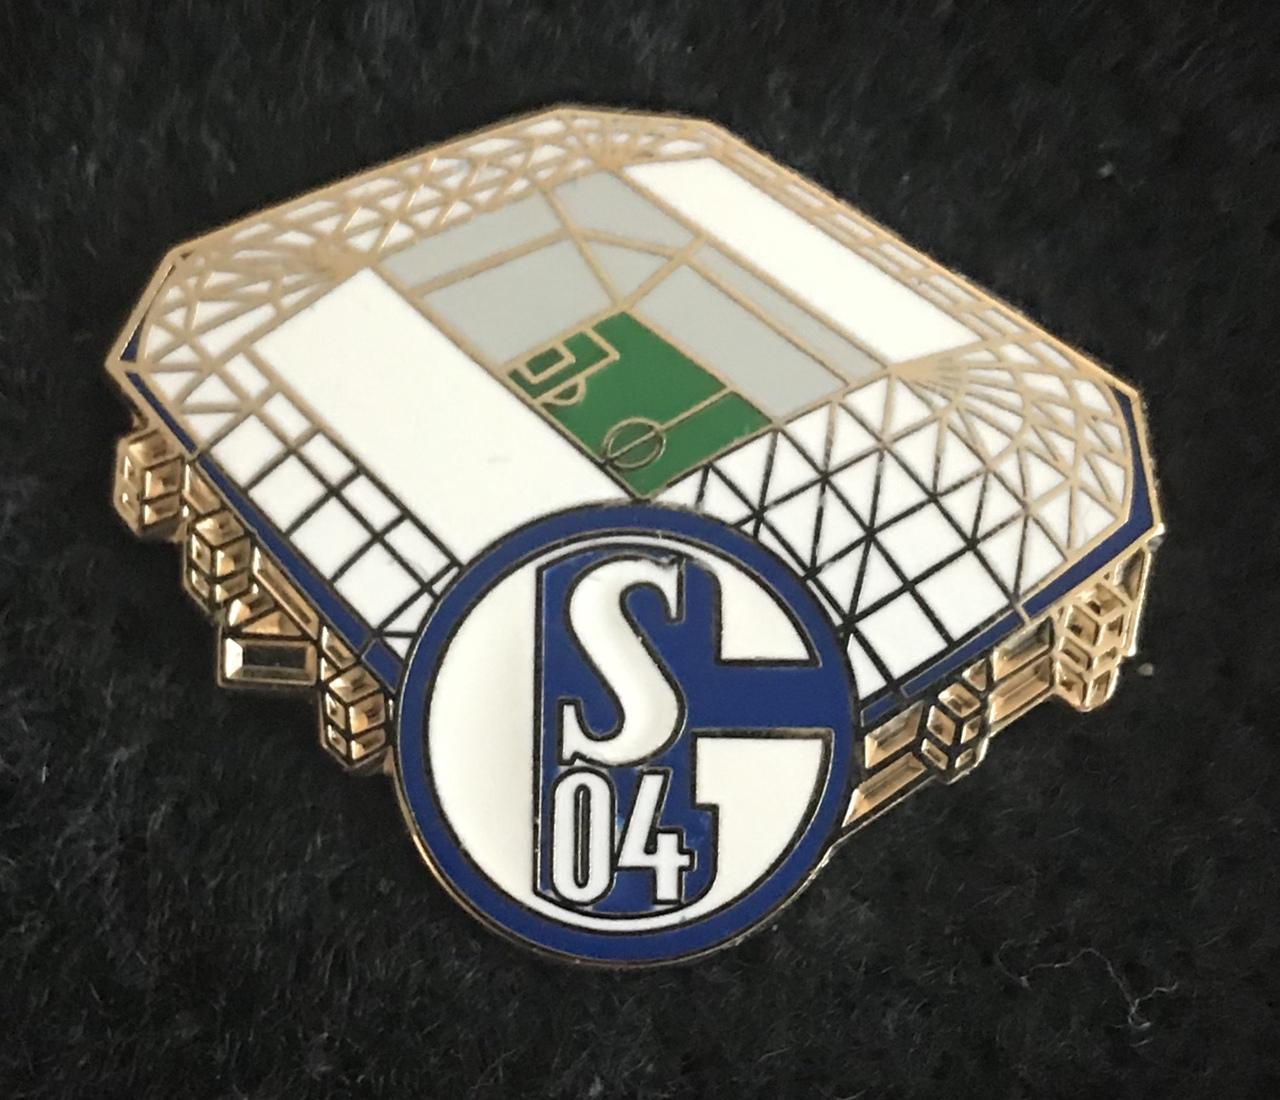 Значок стадион ФК Шальке 04 Германия